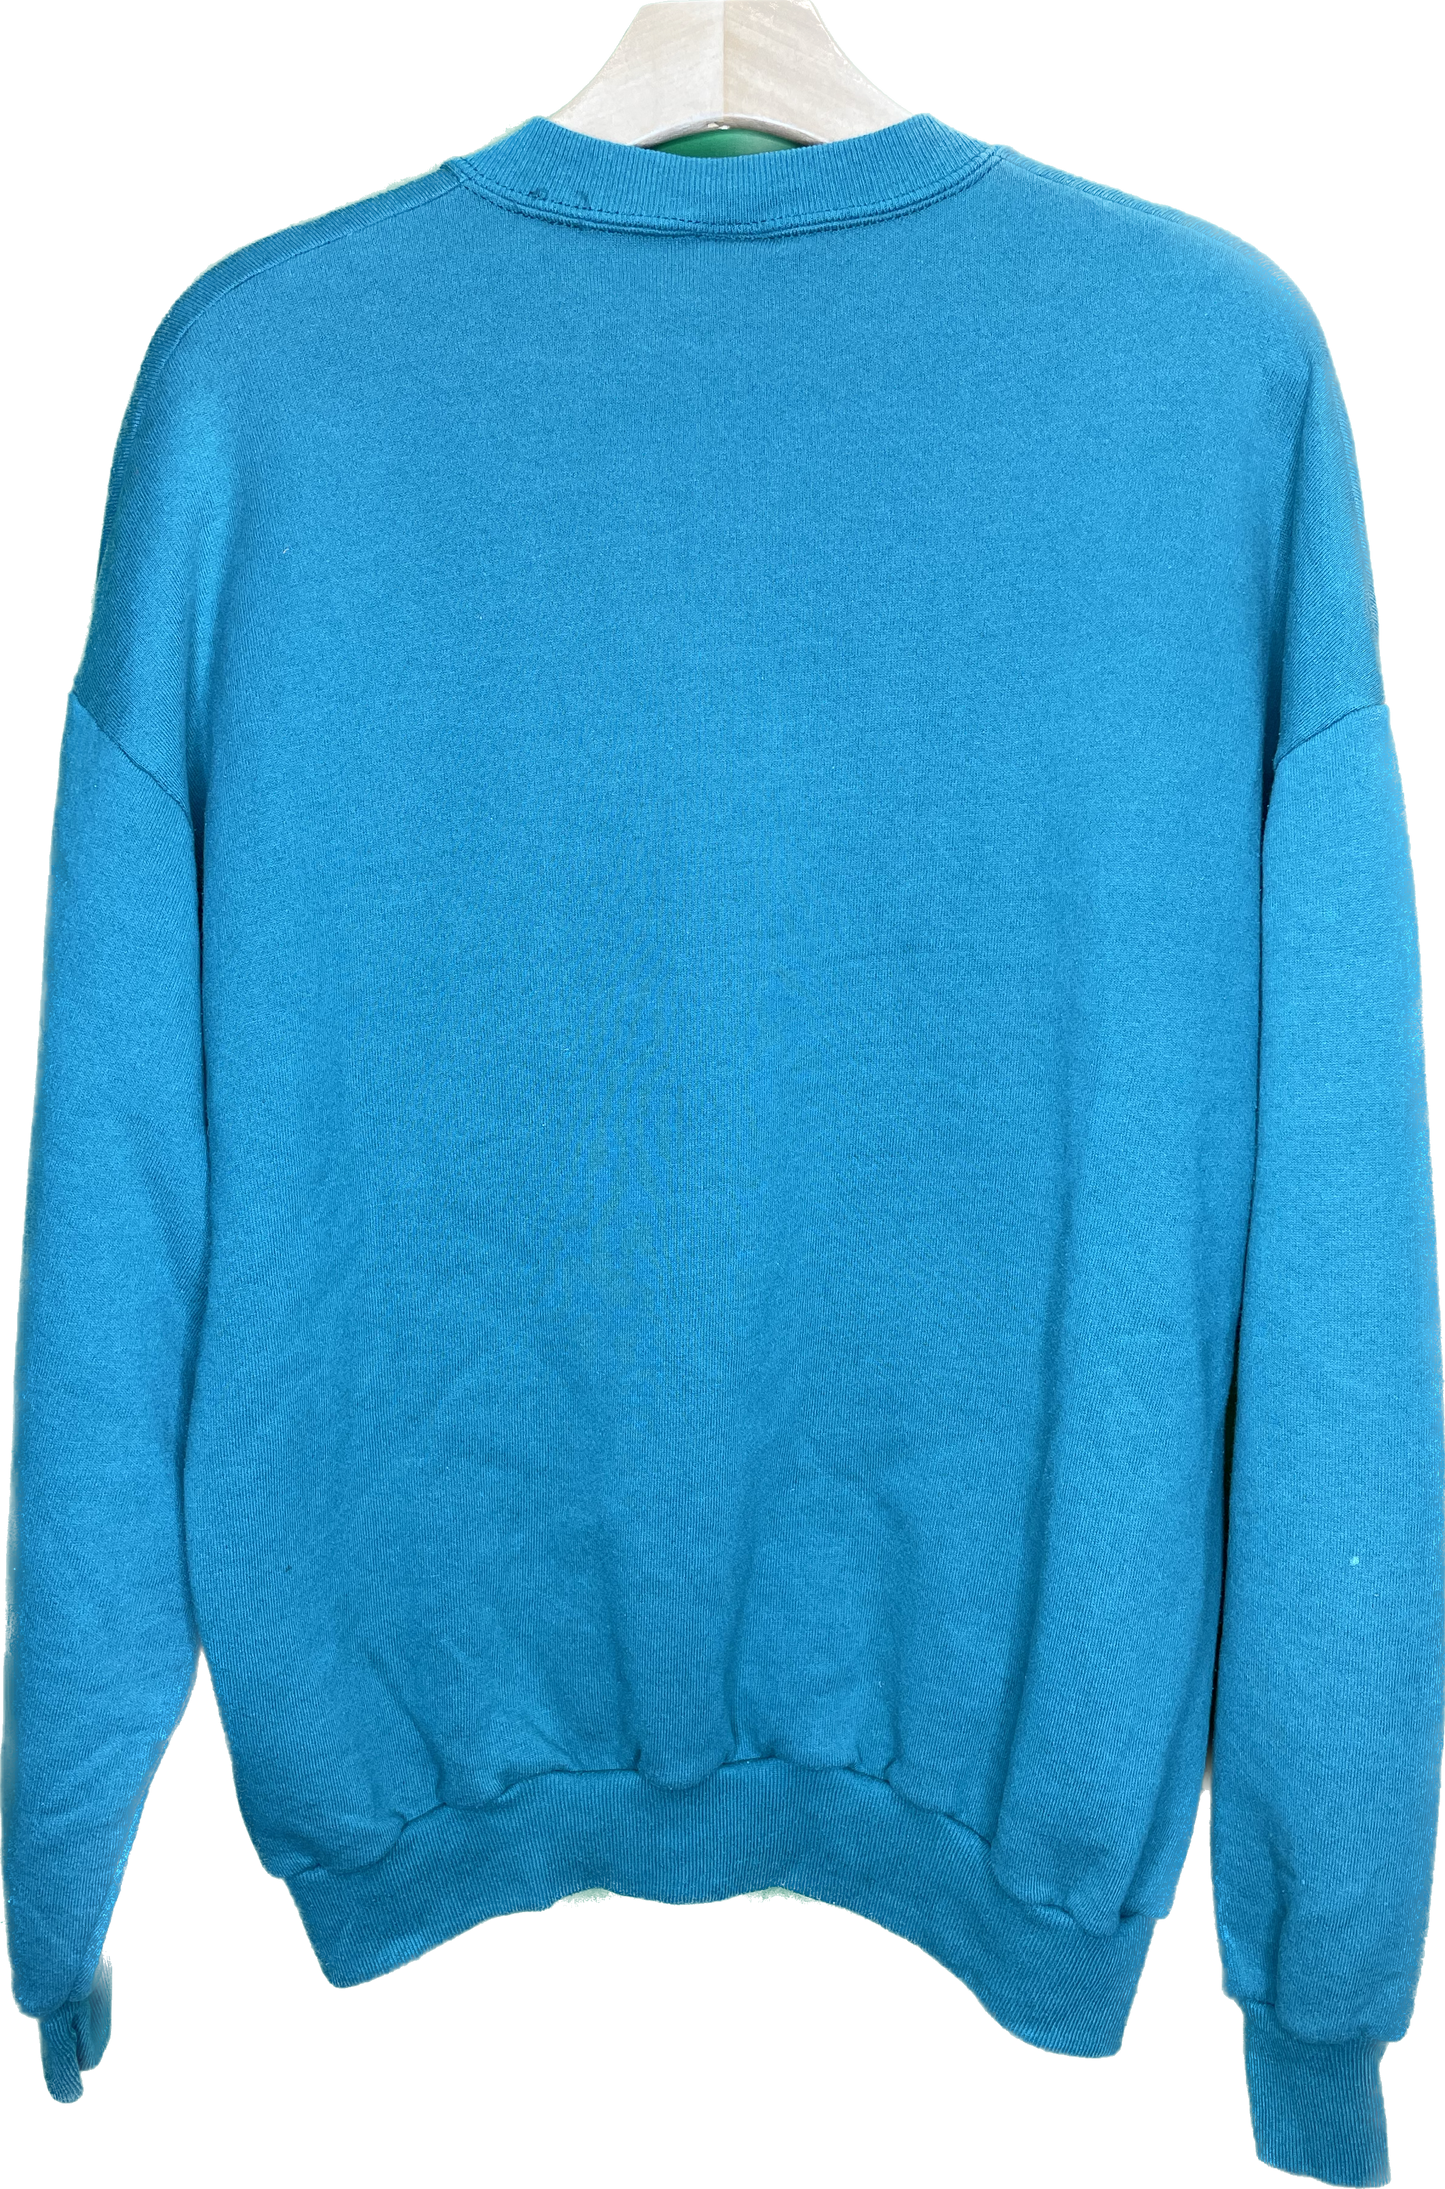 Vintage L Recycle Reduce Rewear Village Vintage Merch 90s Blue Crewneck Sweatshirt